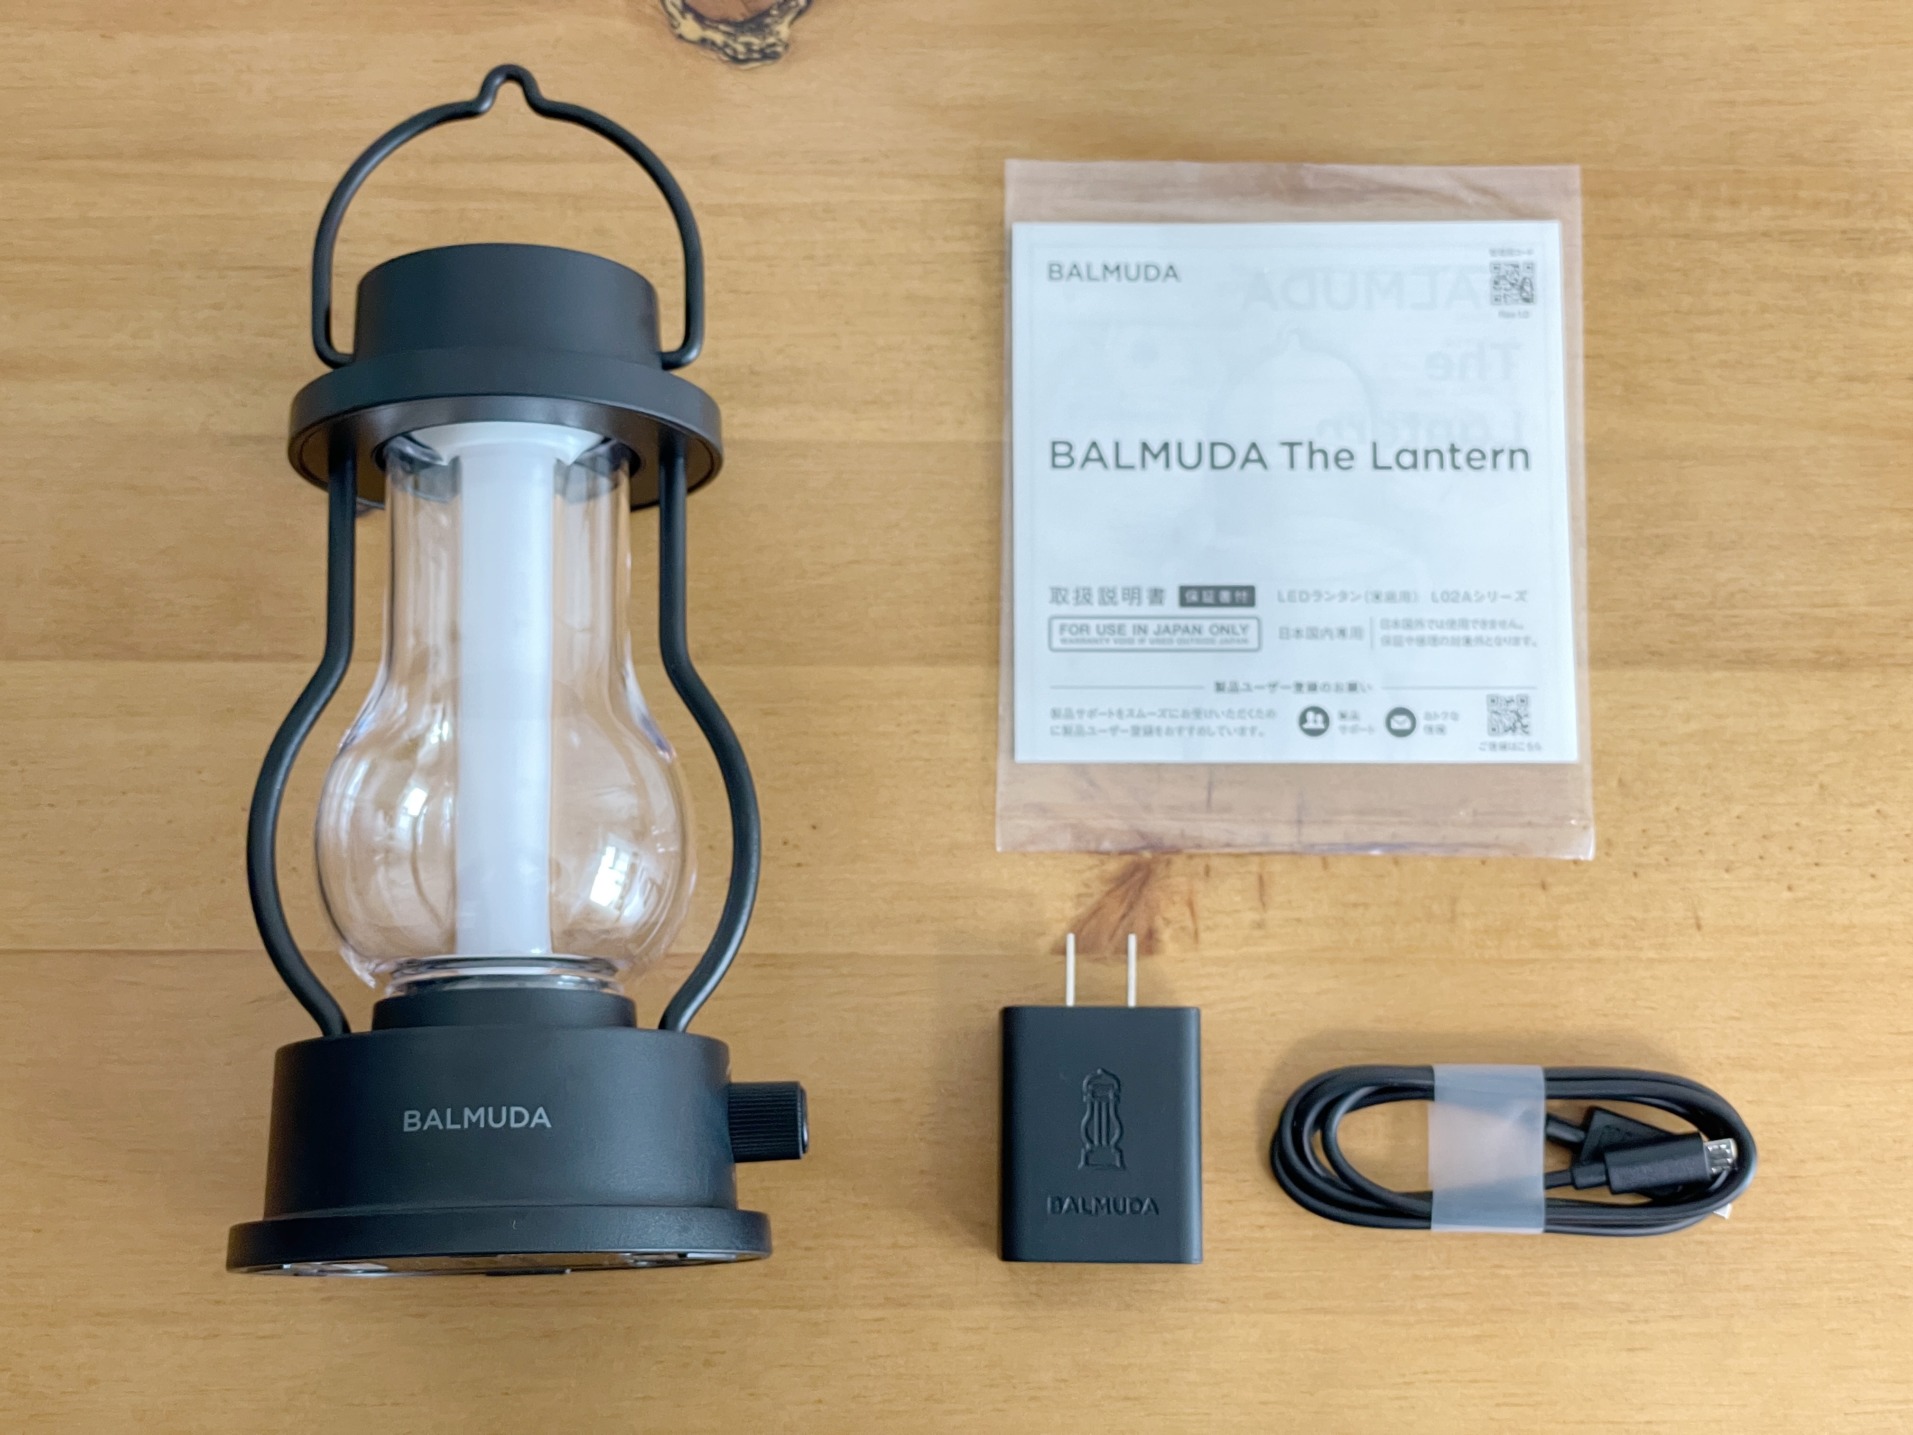 【BALMUDA The Lanternレビュー】USB充電で最大50時間稼働するバルミューダ製LEDランタン | ロピログ